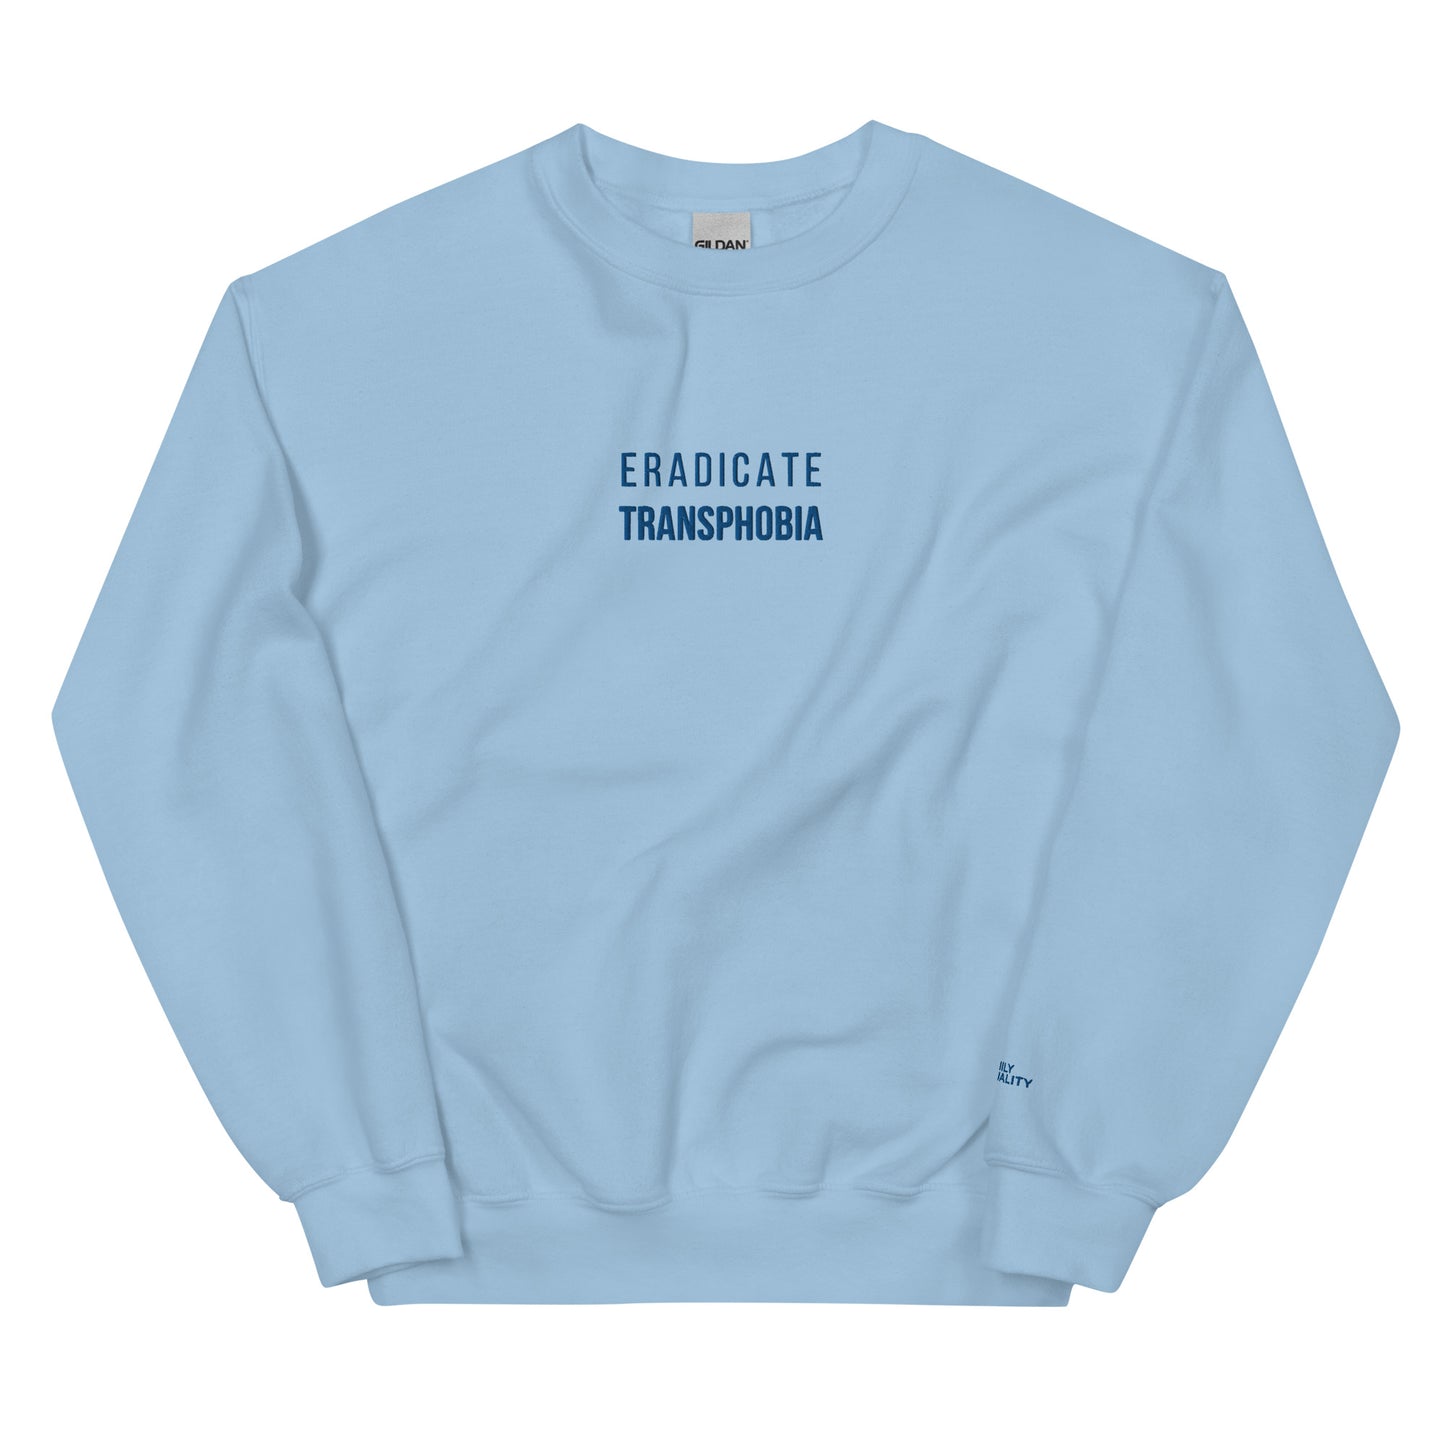 Eradicate Transphobia Sweatshirt in Light Blue